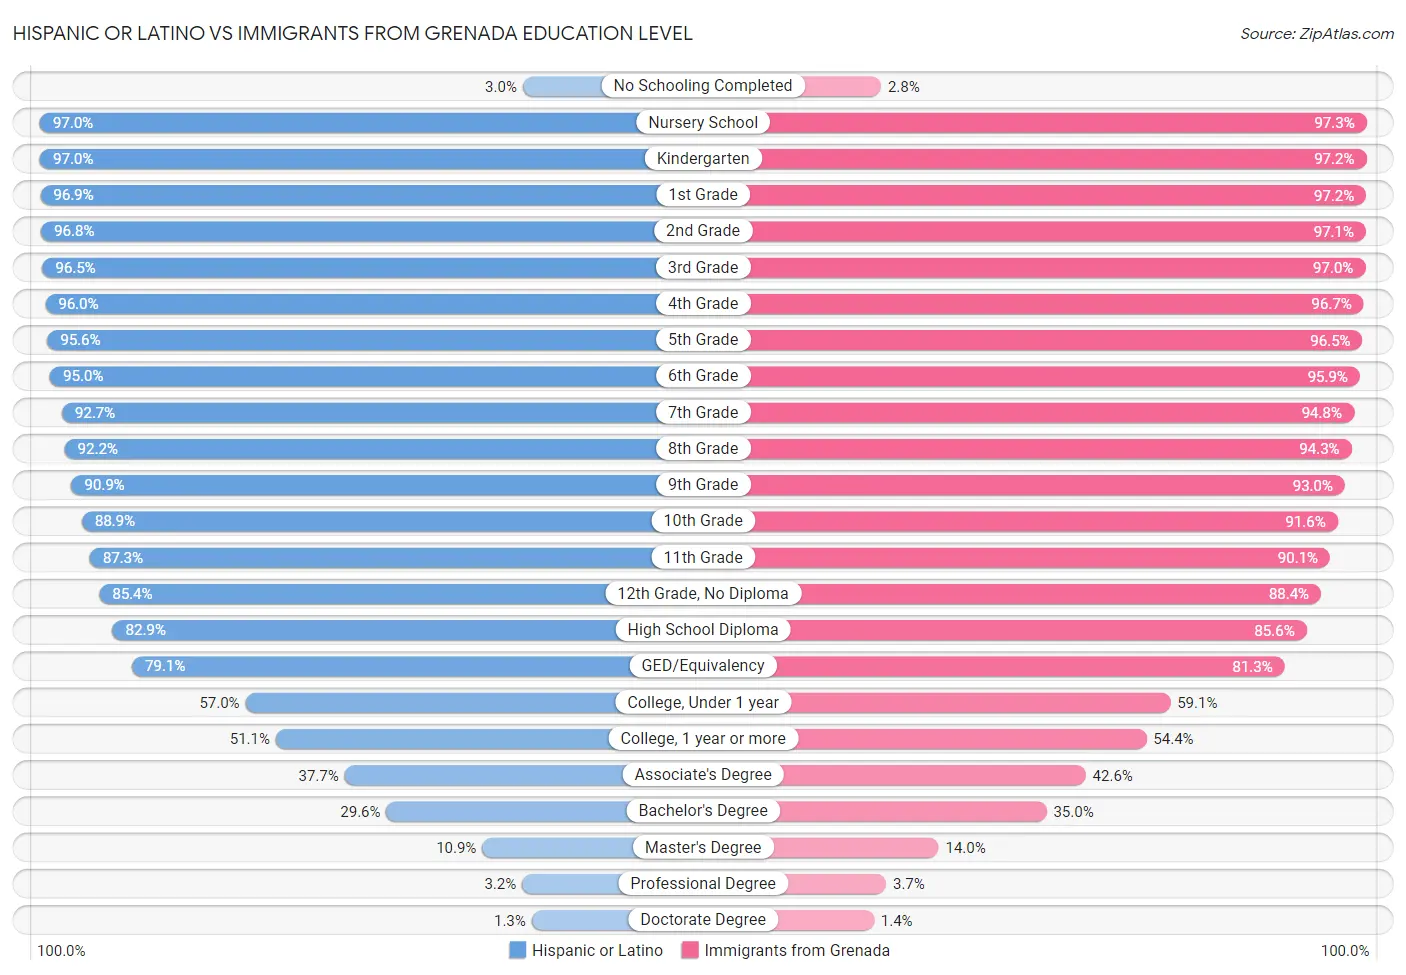 Hispanic or Latino vs Immigrants from Grenada Education Level